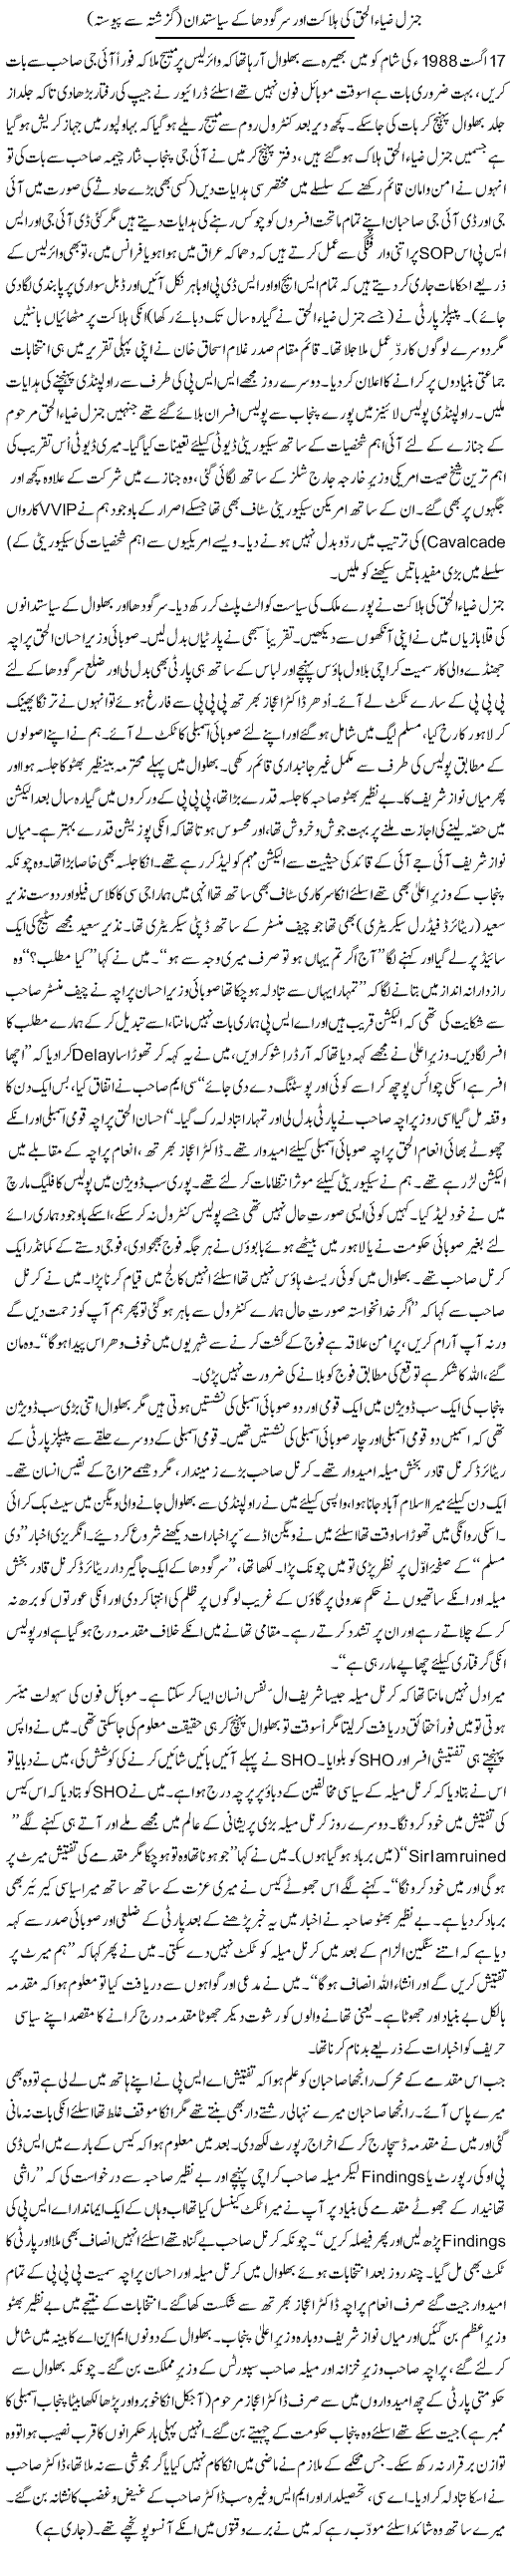 General Zia Ul Haq Ki Halakat Aur Sargodha Ke Siasatdan (guzishta Se Pewasta) | Zulfiqar Ahmed Cheema | Daily Urdu Columns